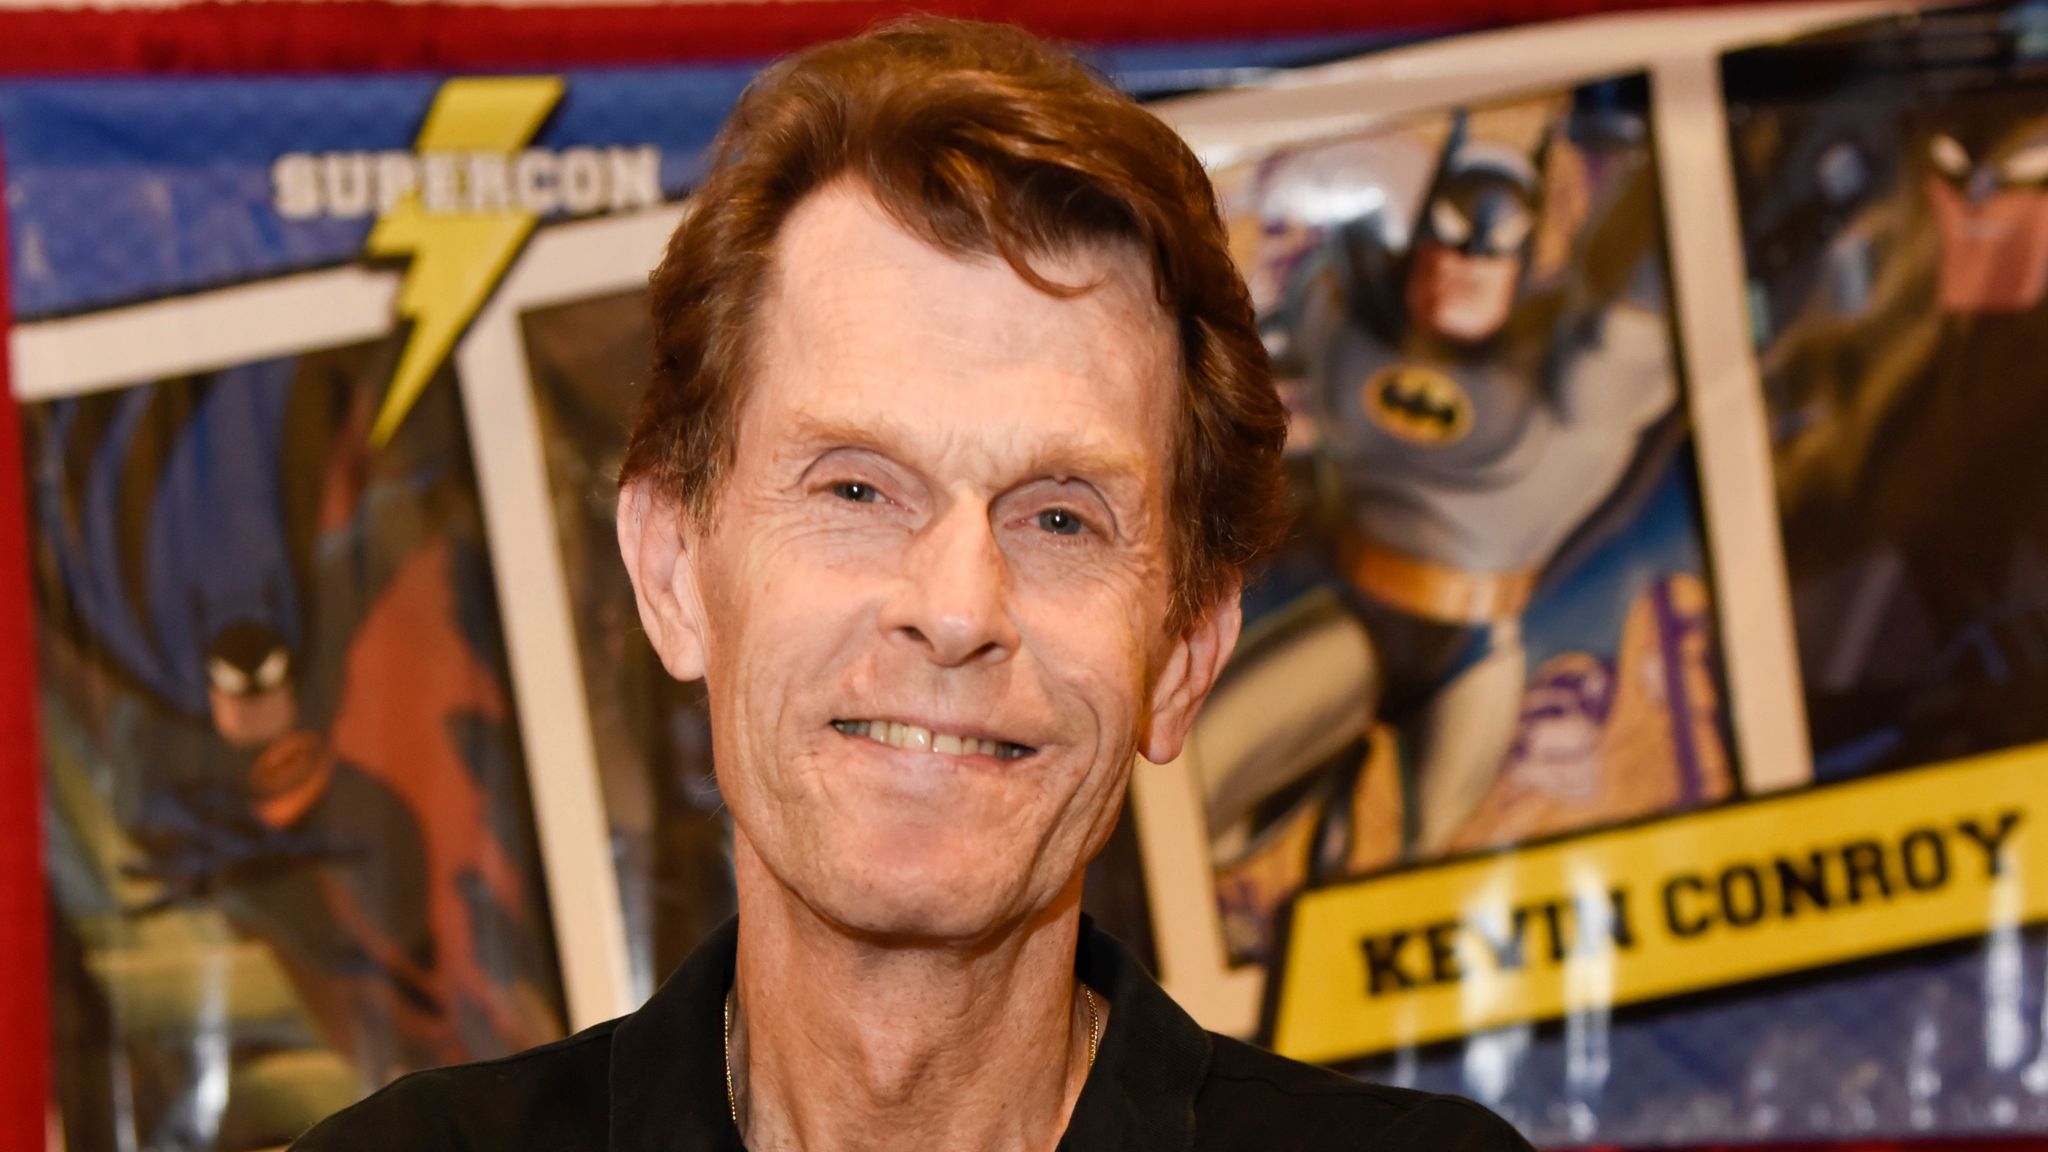 Batman voice actor Kevin Conroy dies aged 66 | Ents & Arts News | Sky News